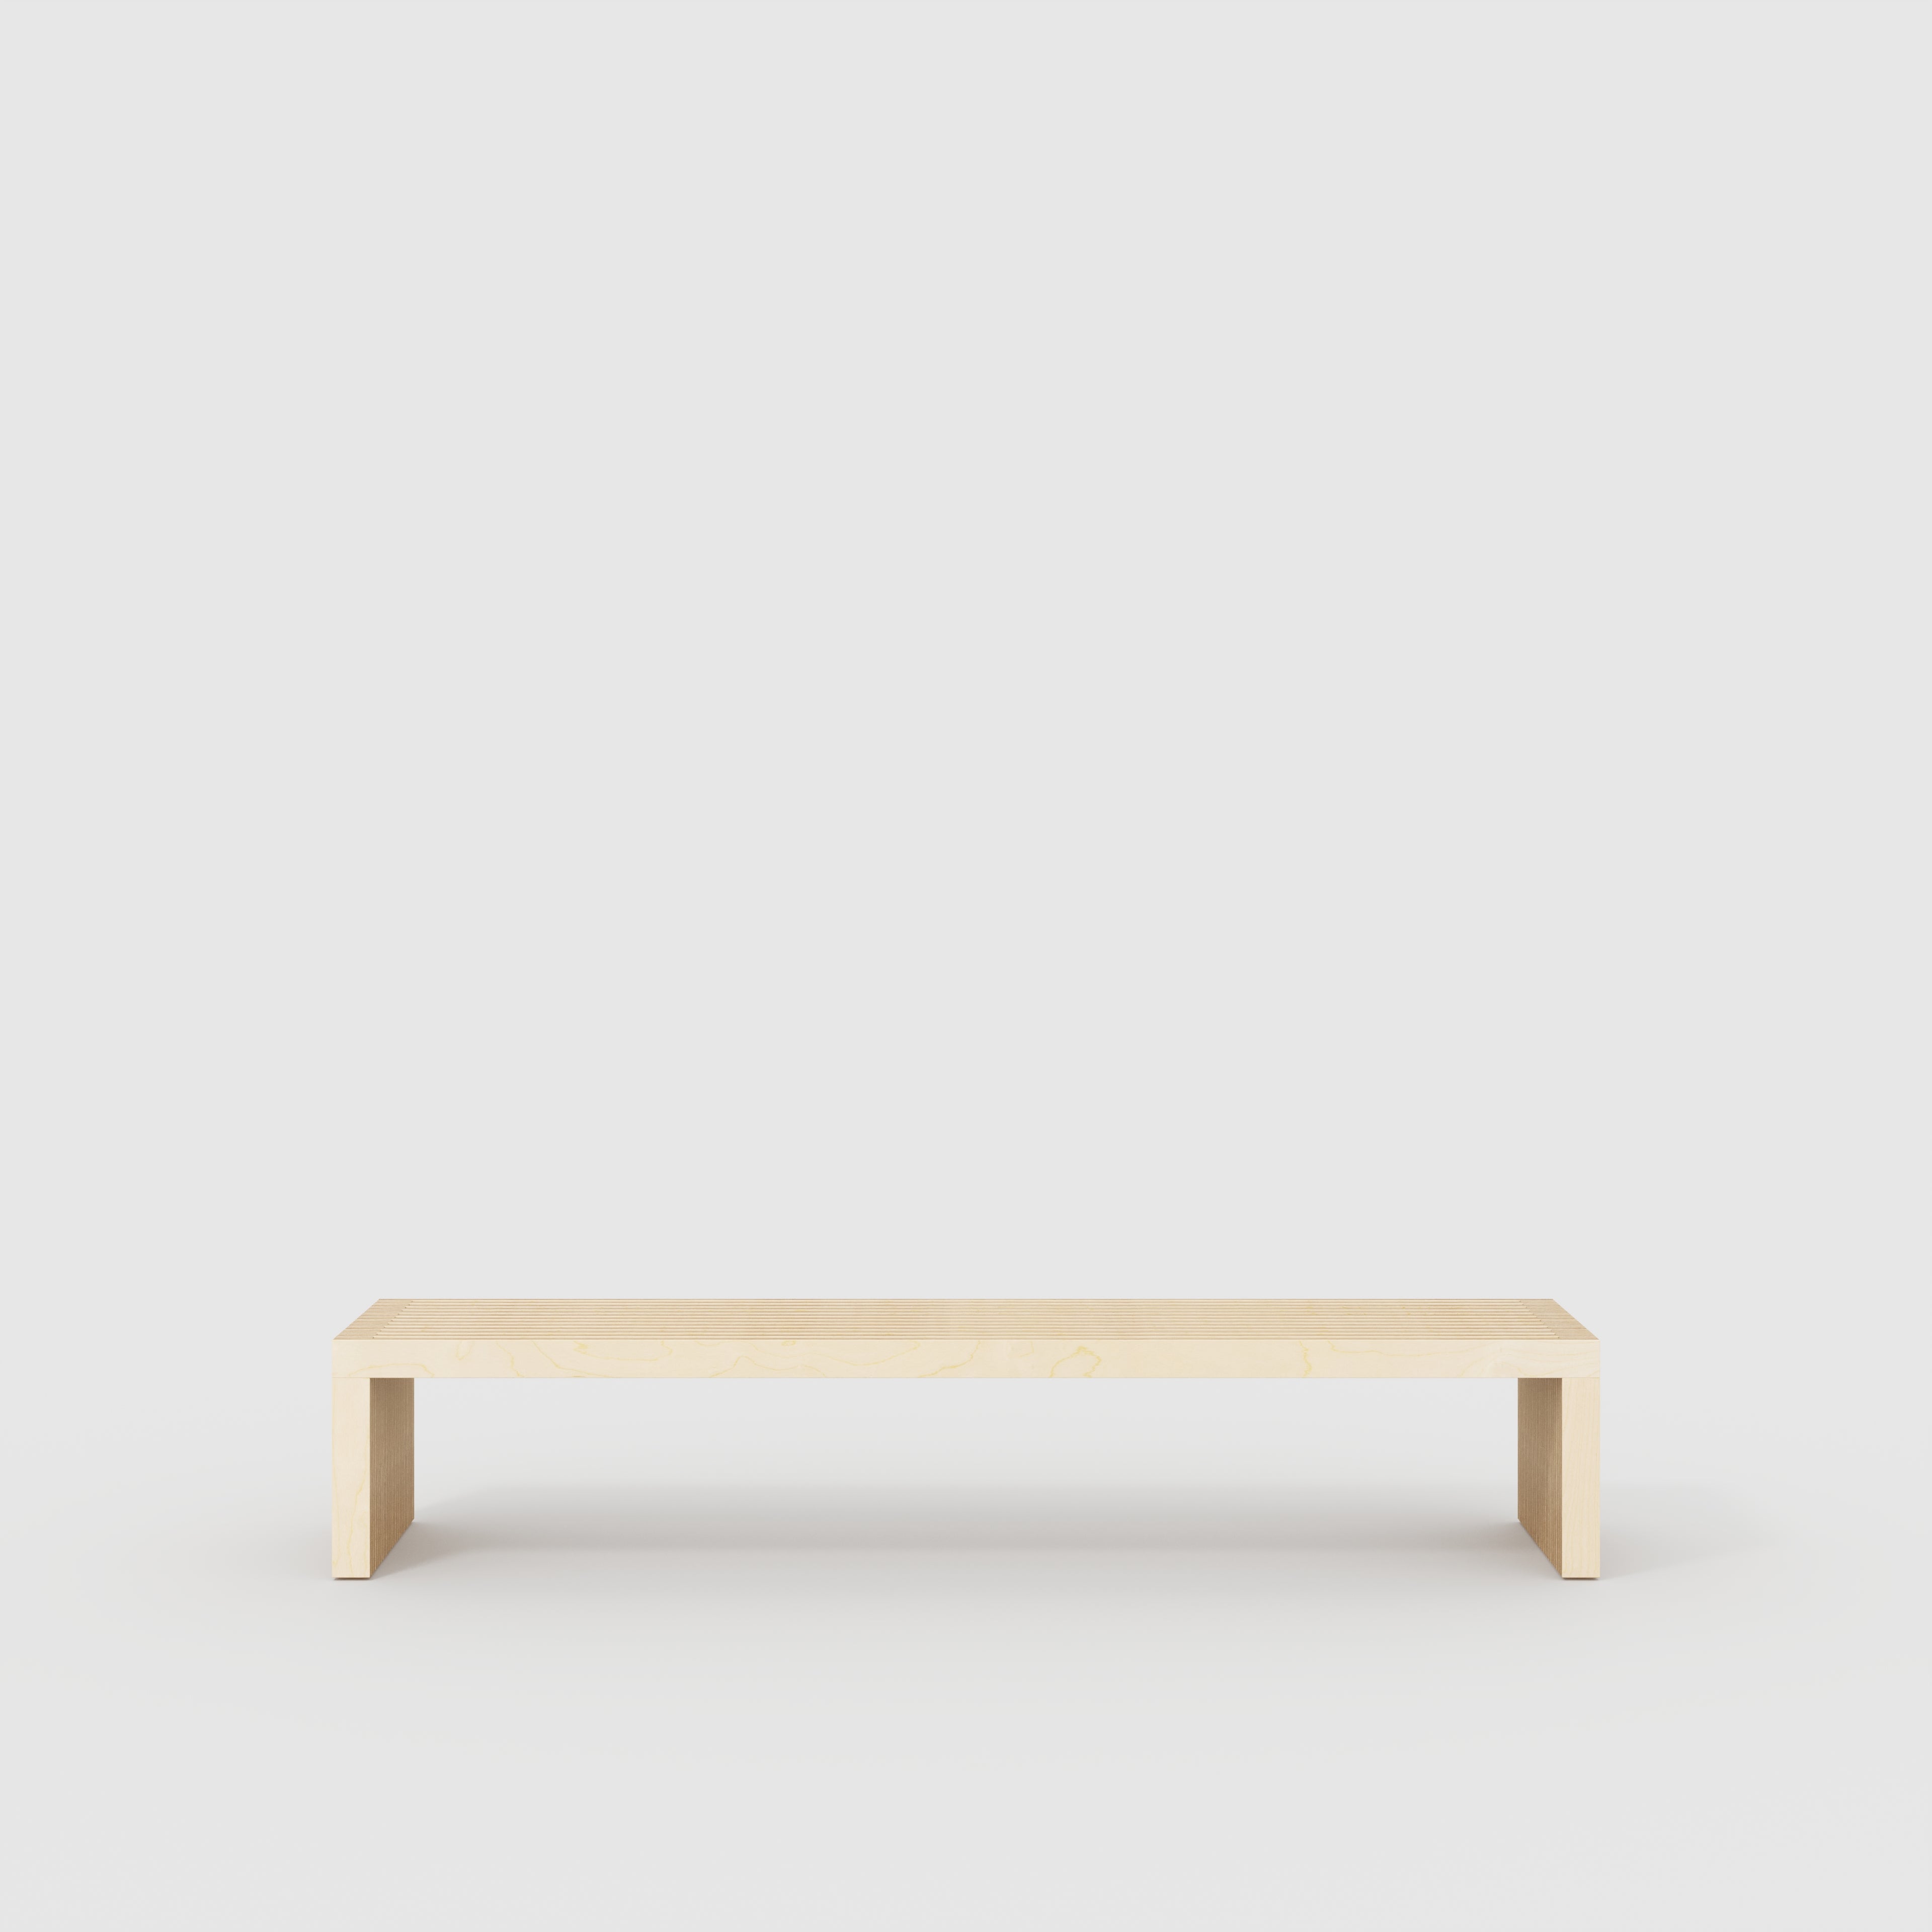 Bench Seat with Slats - Plywood Birch - 2400(w) x 450(d) x 450(h)